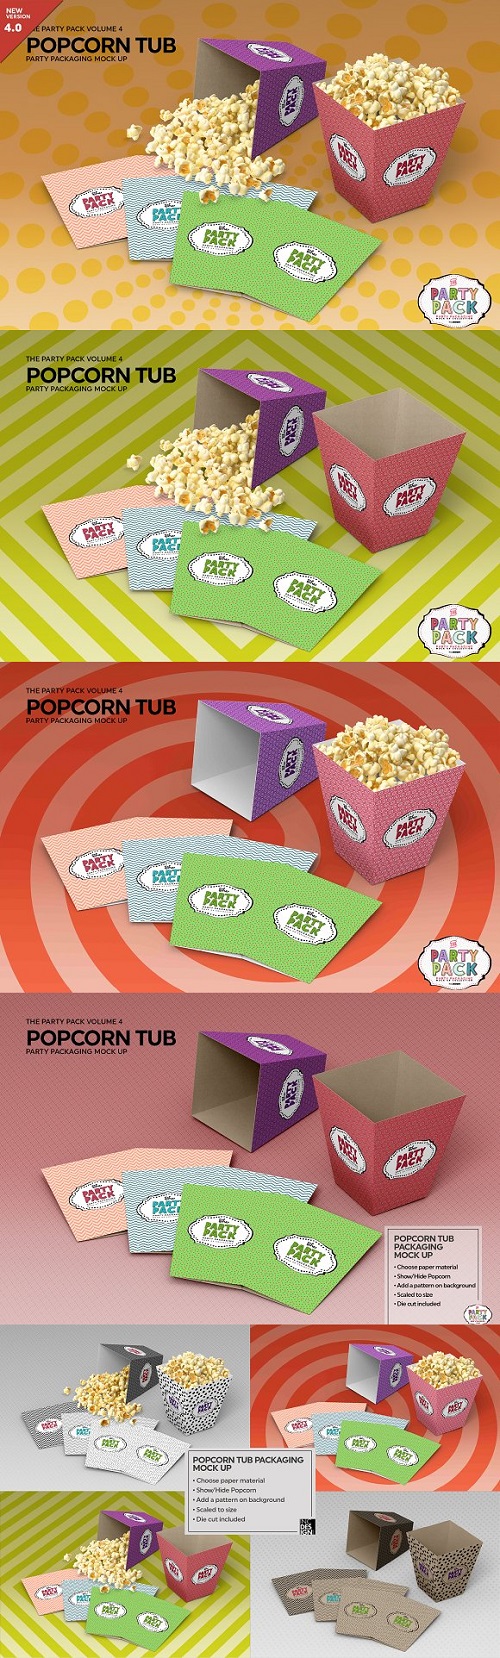 Popcorn Tub Packaging Mock Up - 2198469